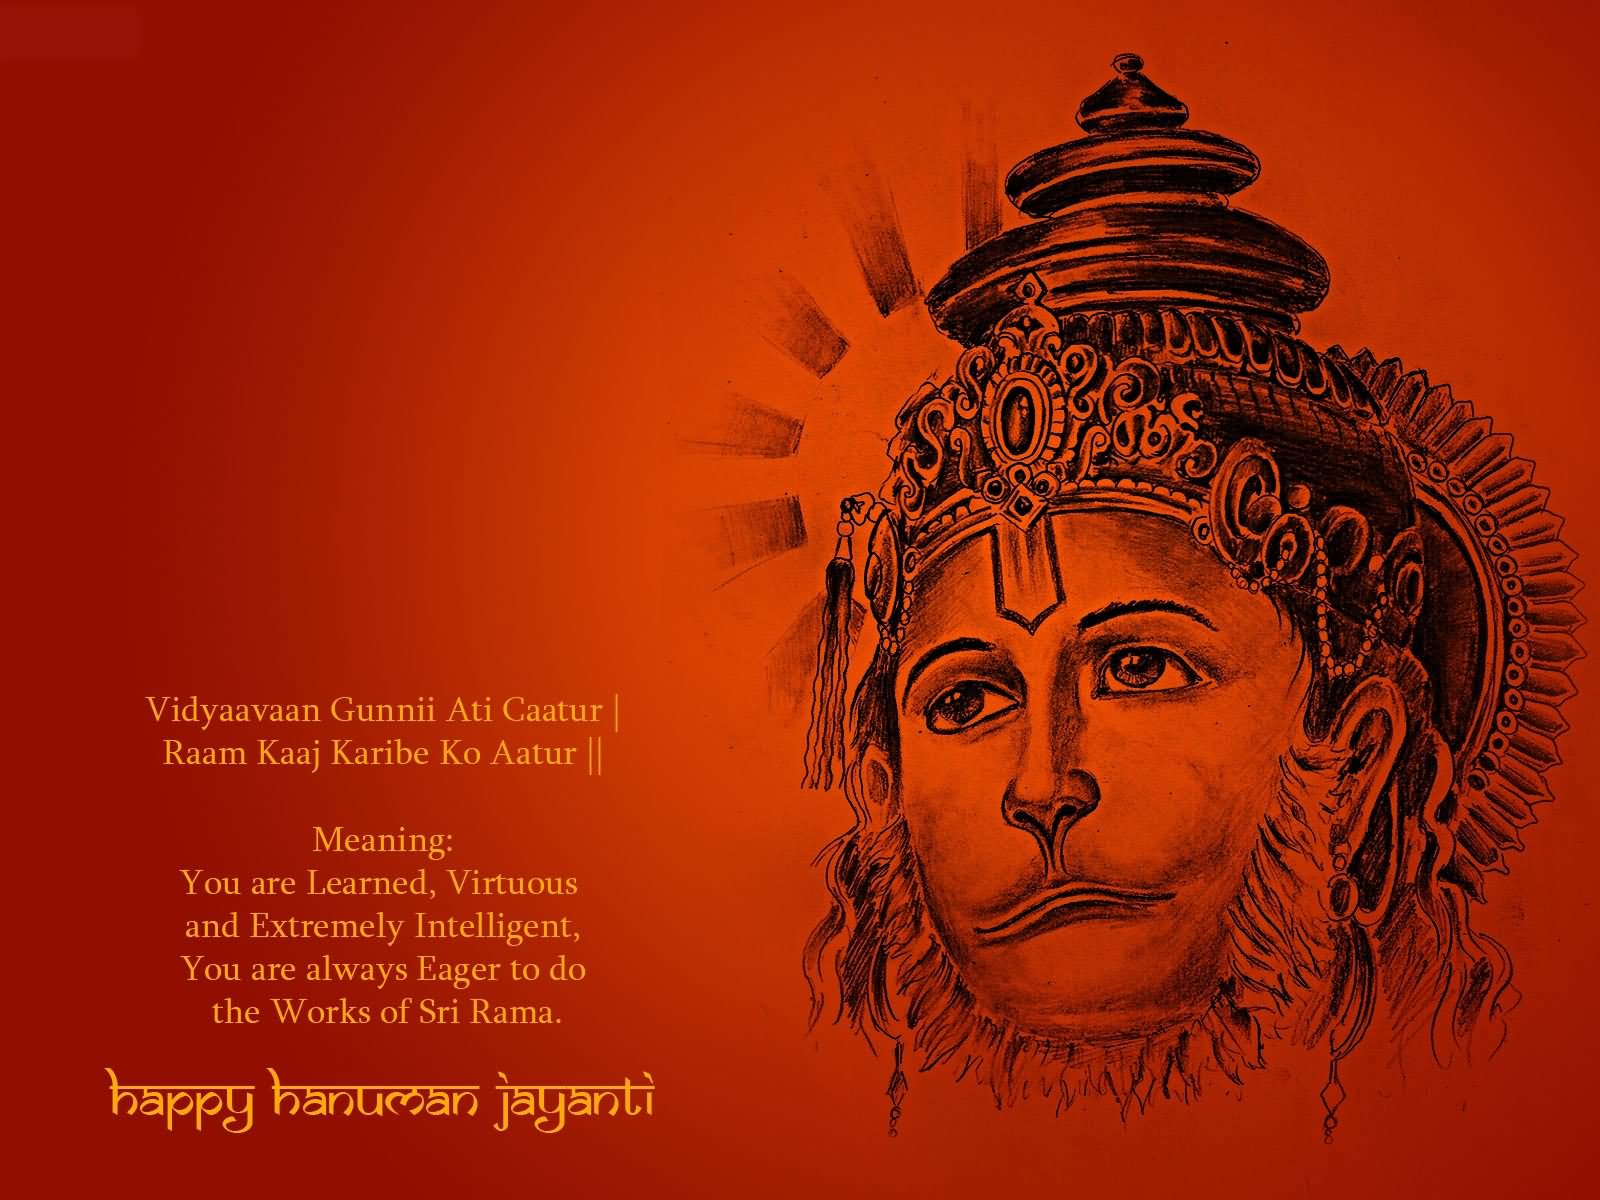 Happy Hanuman Jayanti Wishes Card